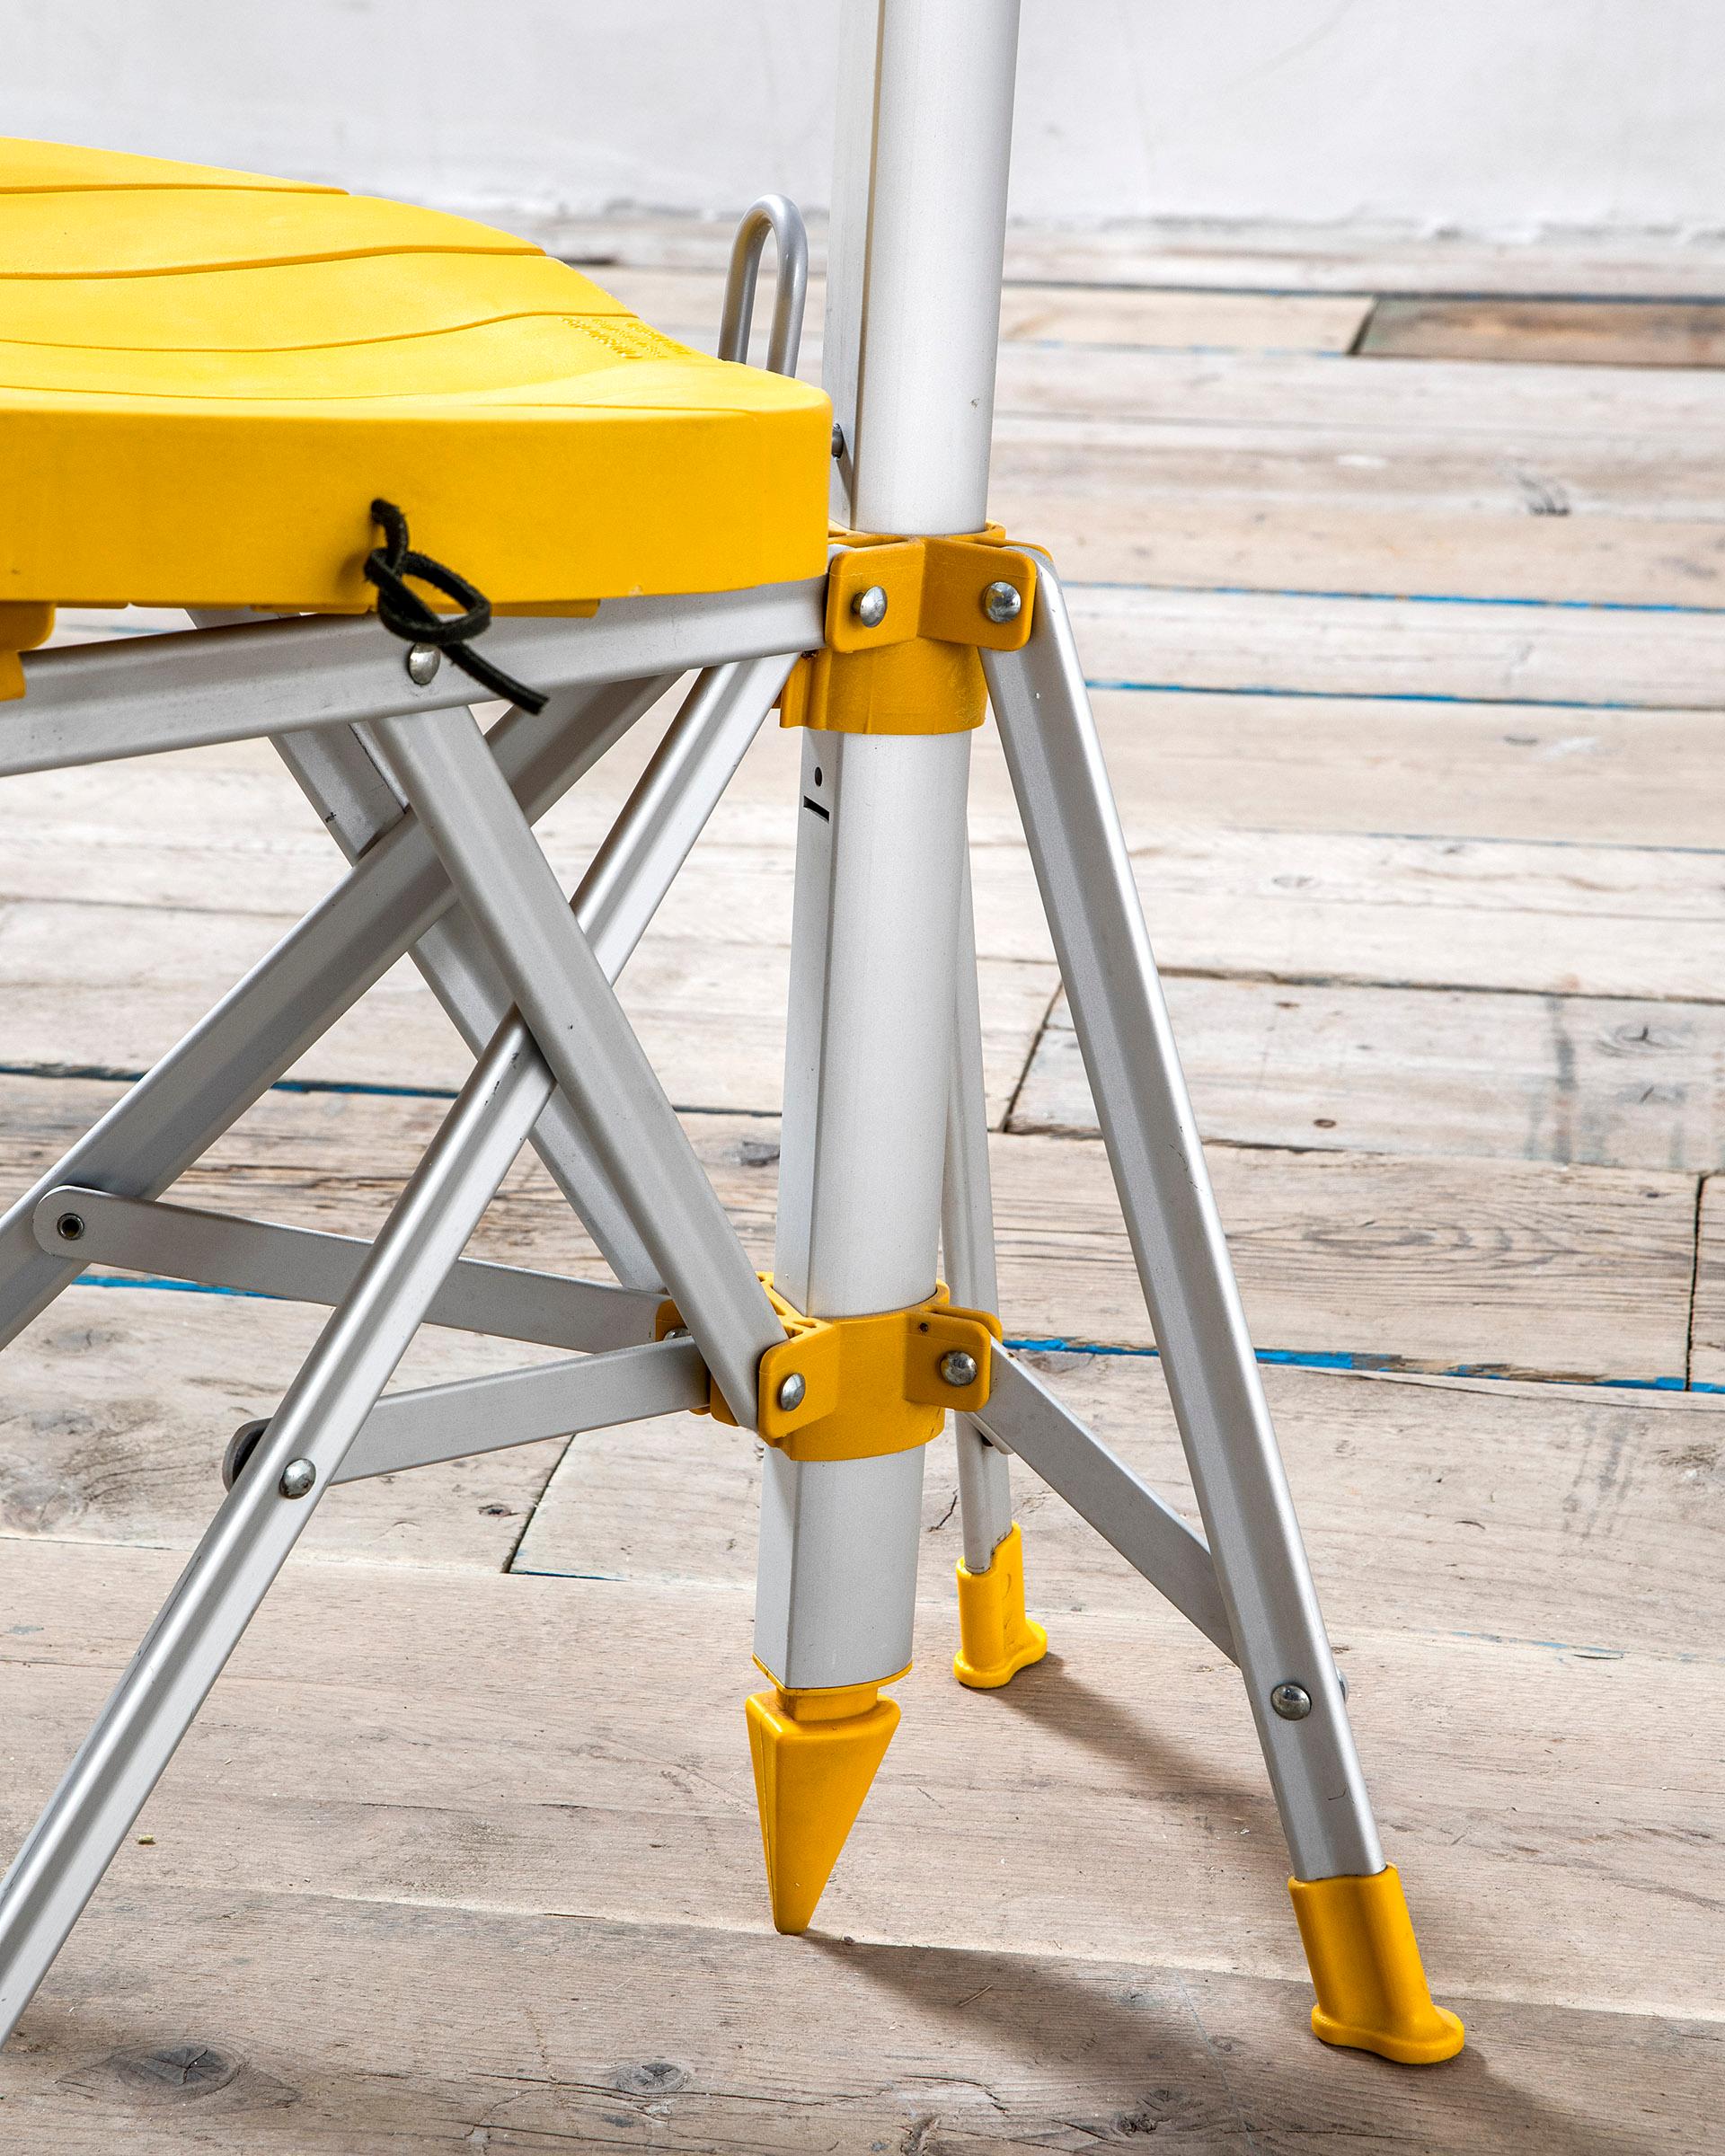 Italian 20th Century Gaetano Pesce Umbrella Chair Folding and Transportable Yellow For Sale